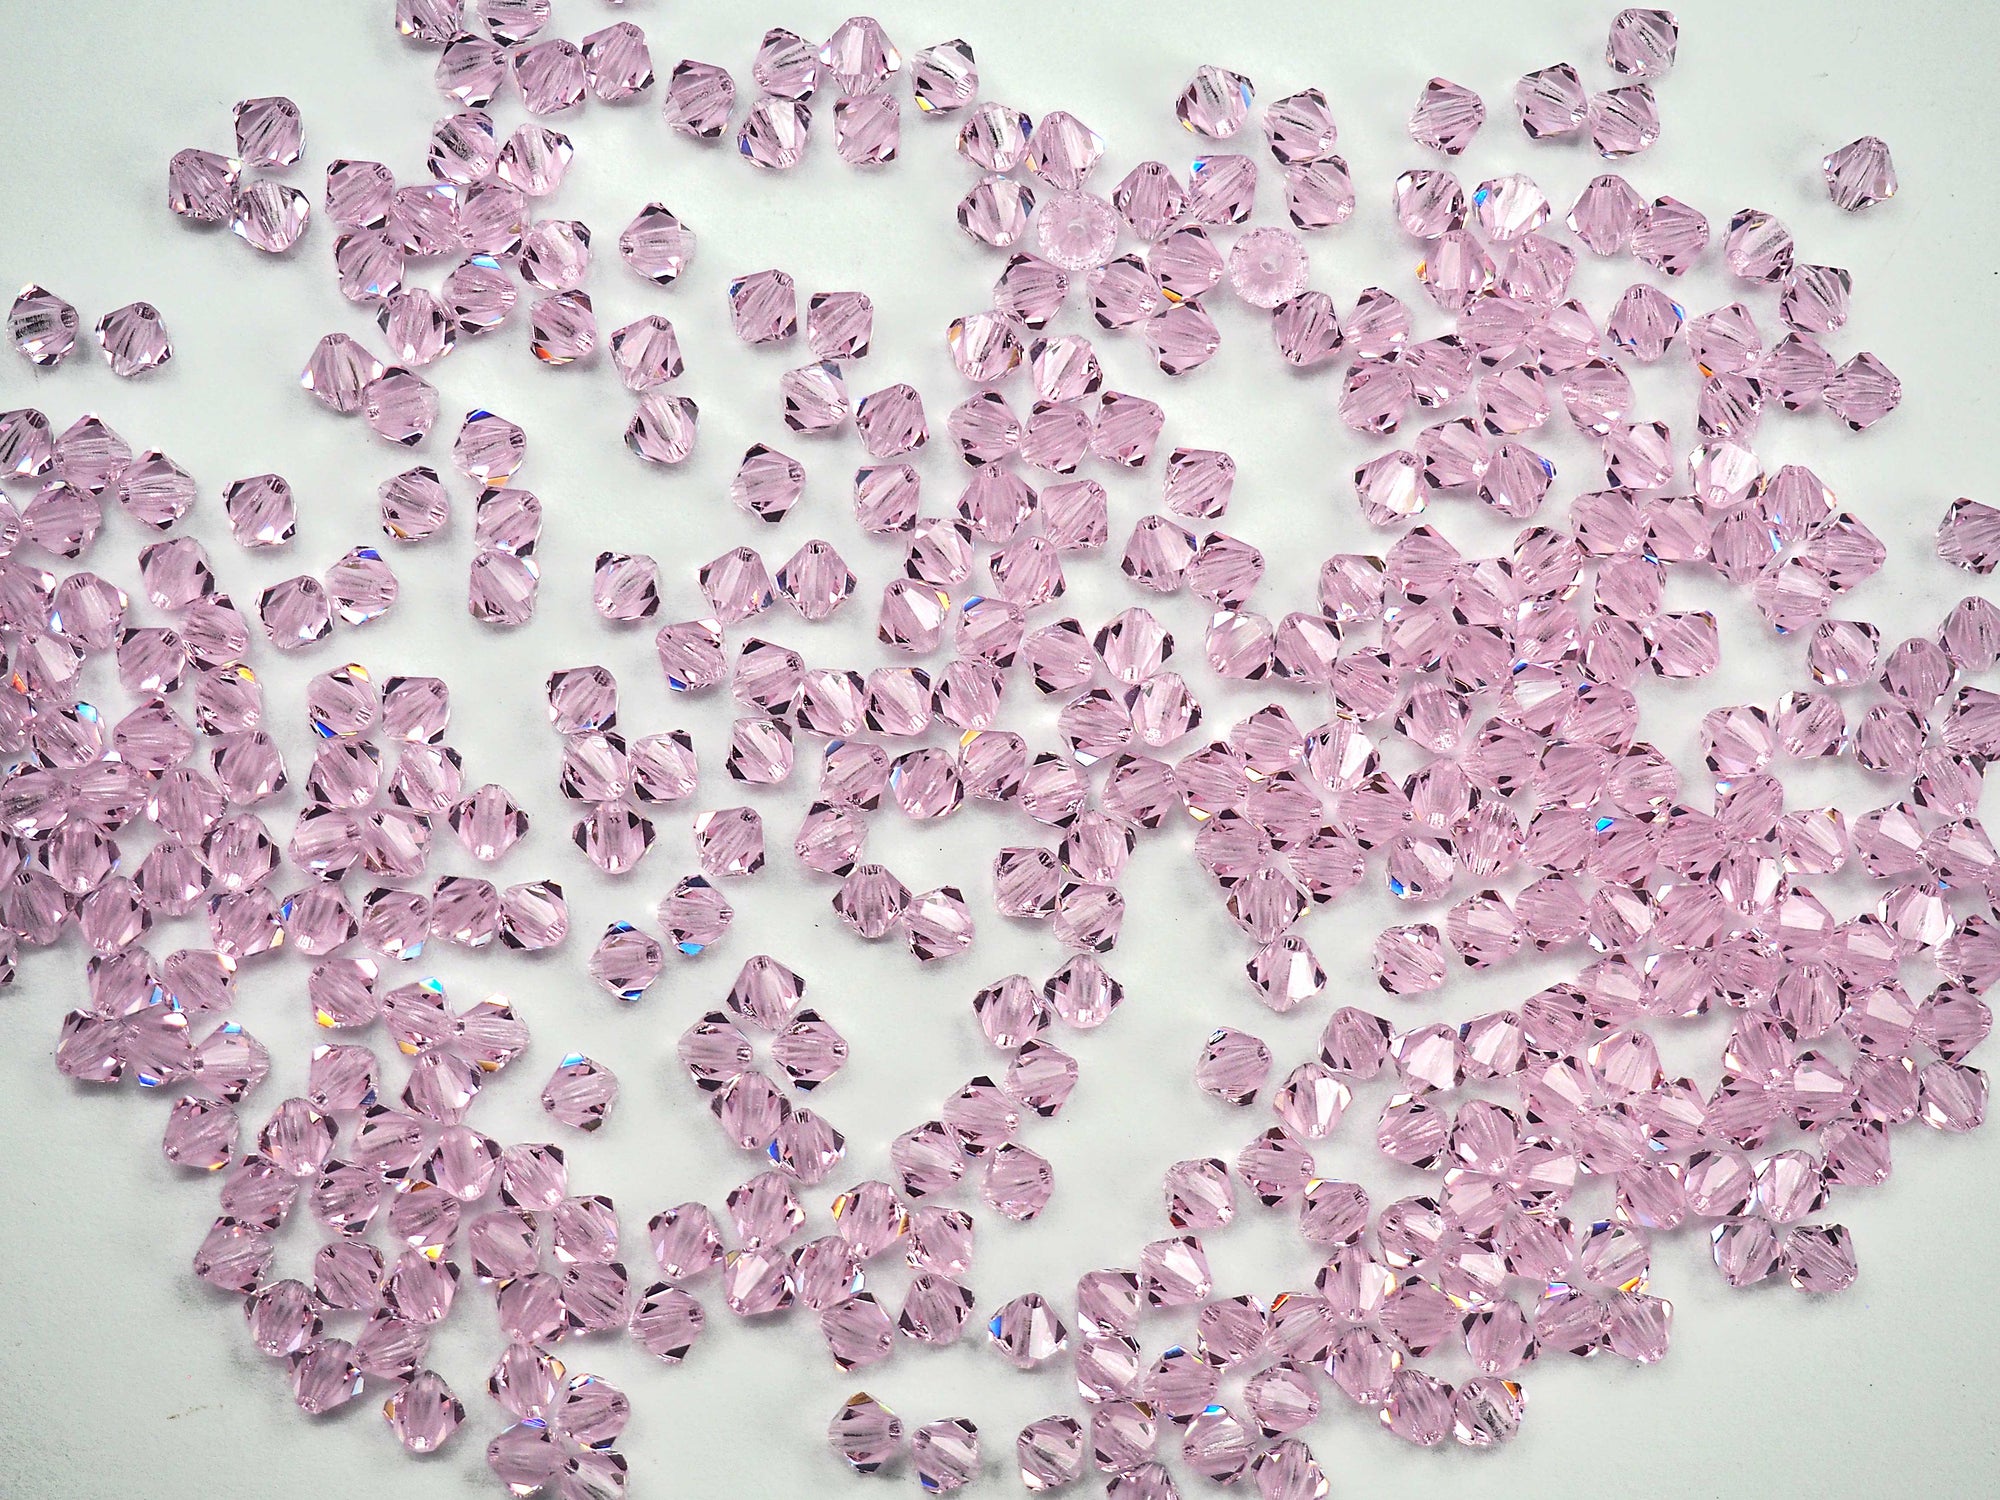 Pink Sapphire Preciosa Czech Glass Beads Machine Cut Bicones (MC Rondell Diamond Shape) light pink crystals 4mm 6mm 8mm